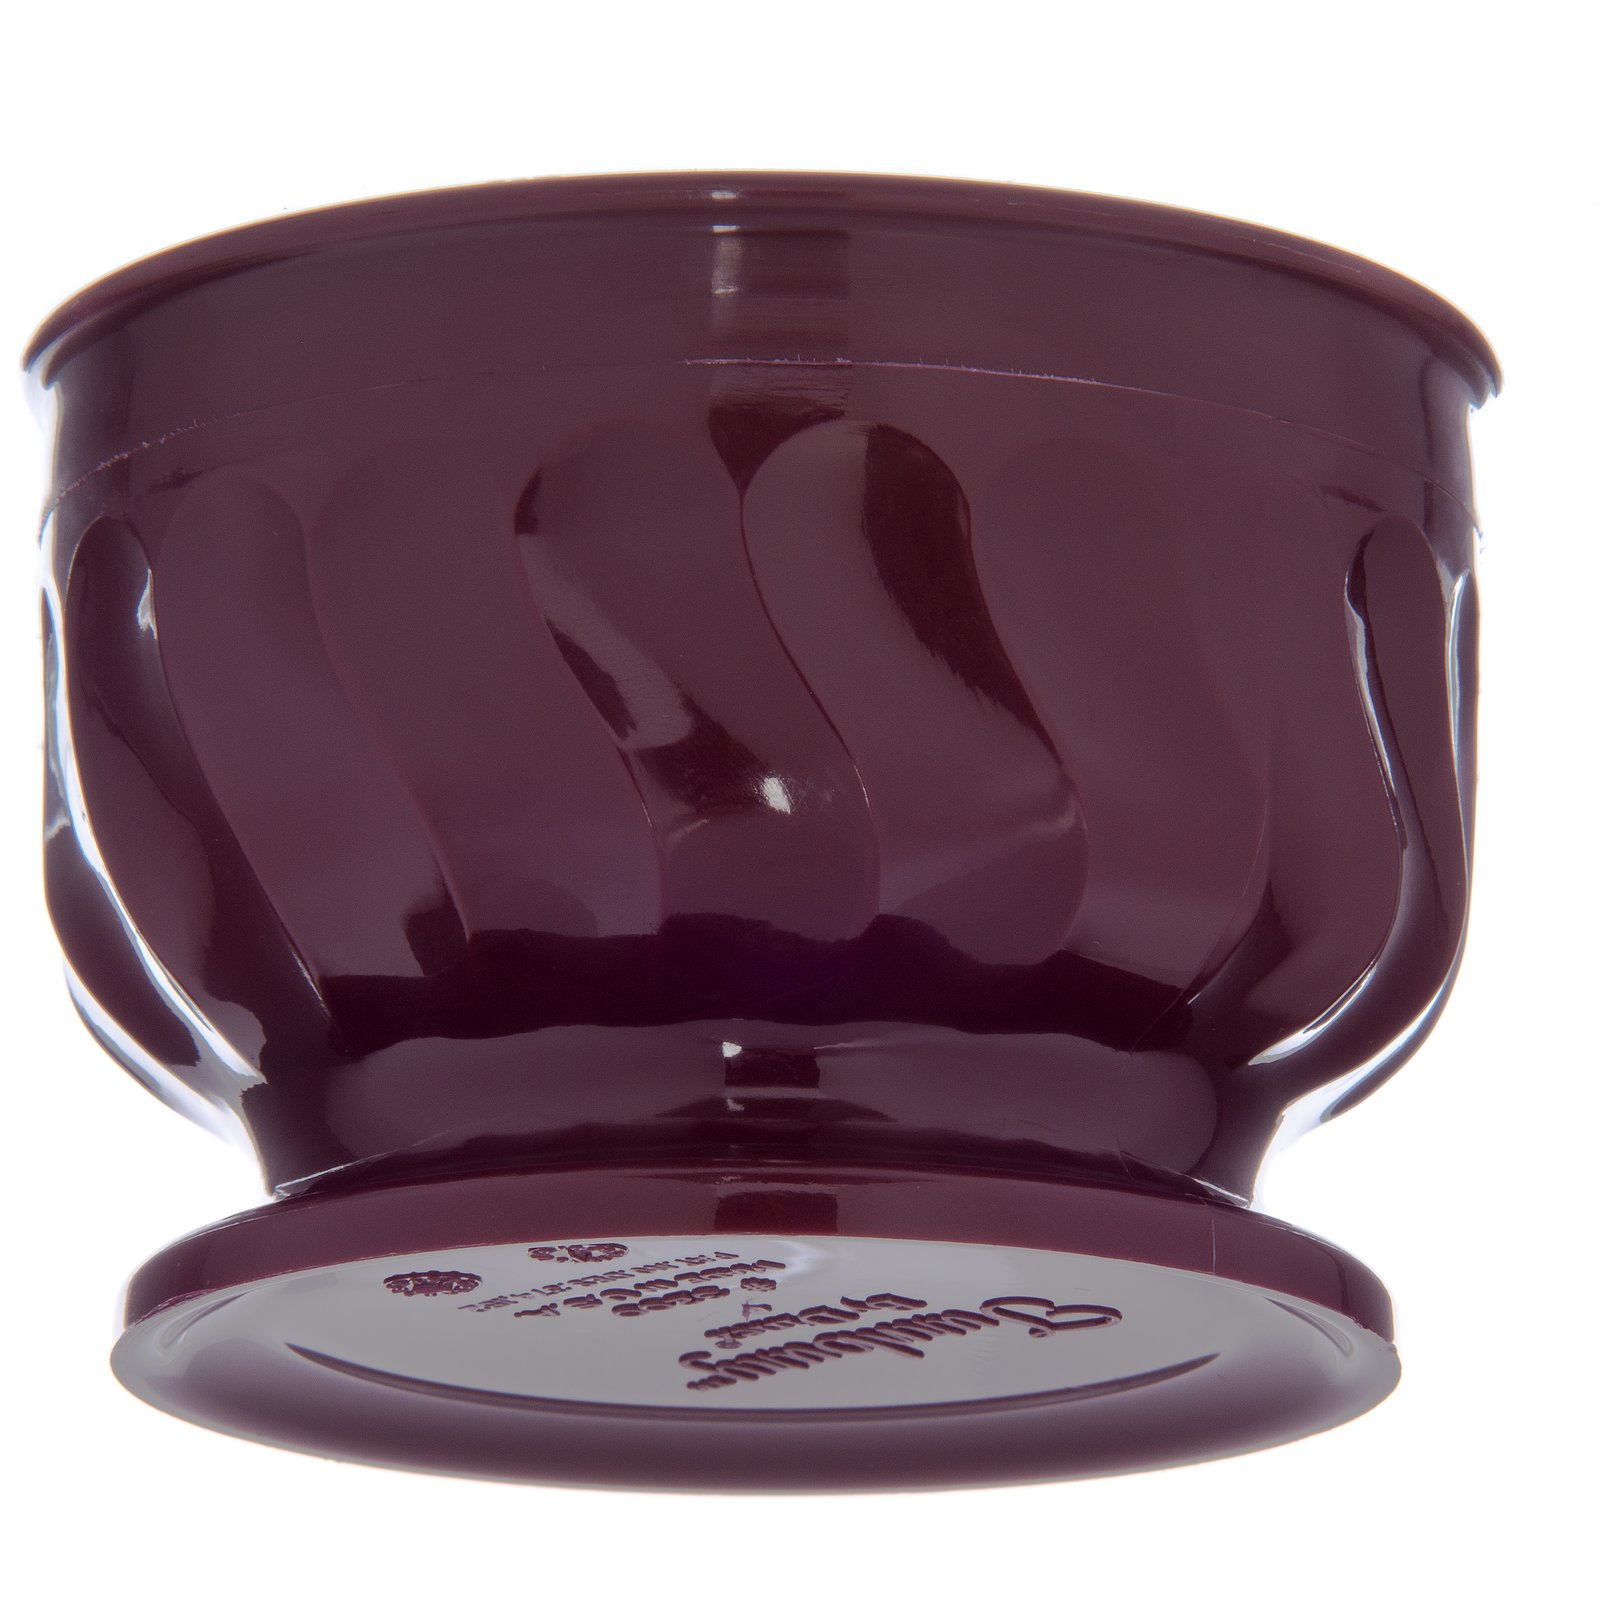 DX330084 - Turnbury® Insulated Pedestal Based Bowl 9 oz (48/cs